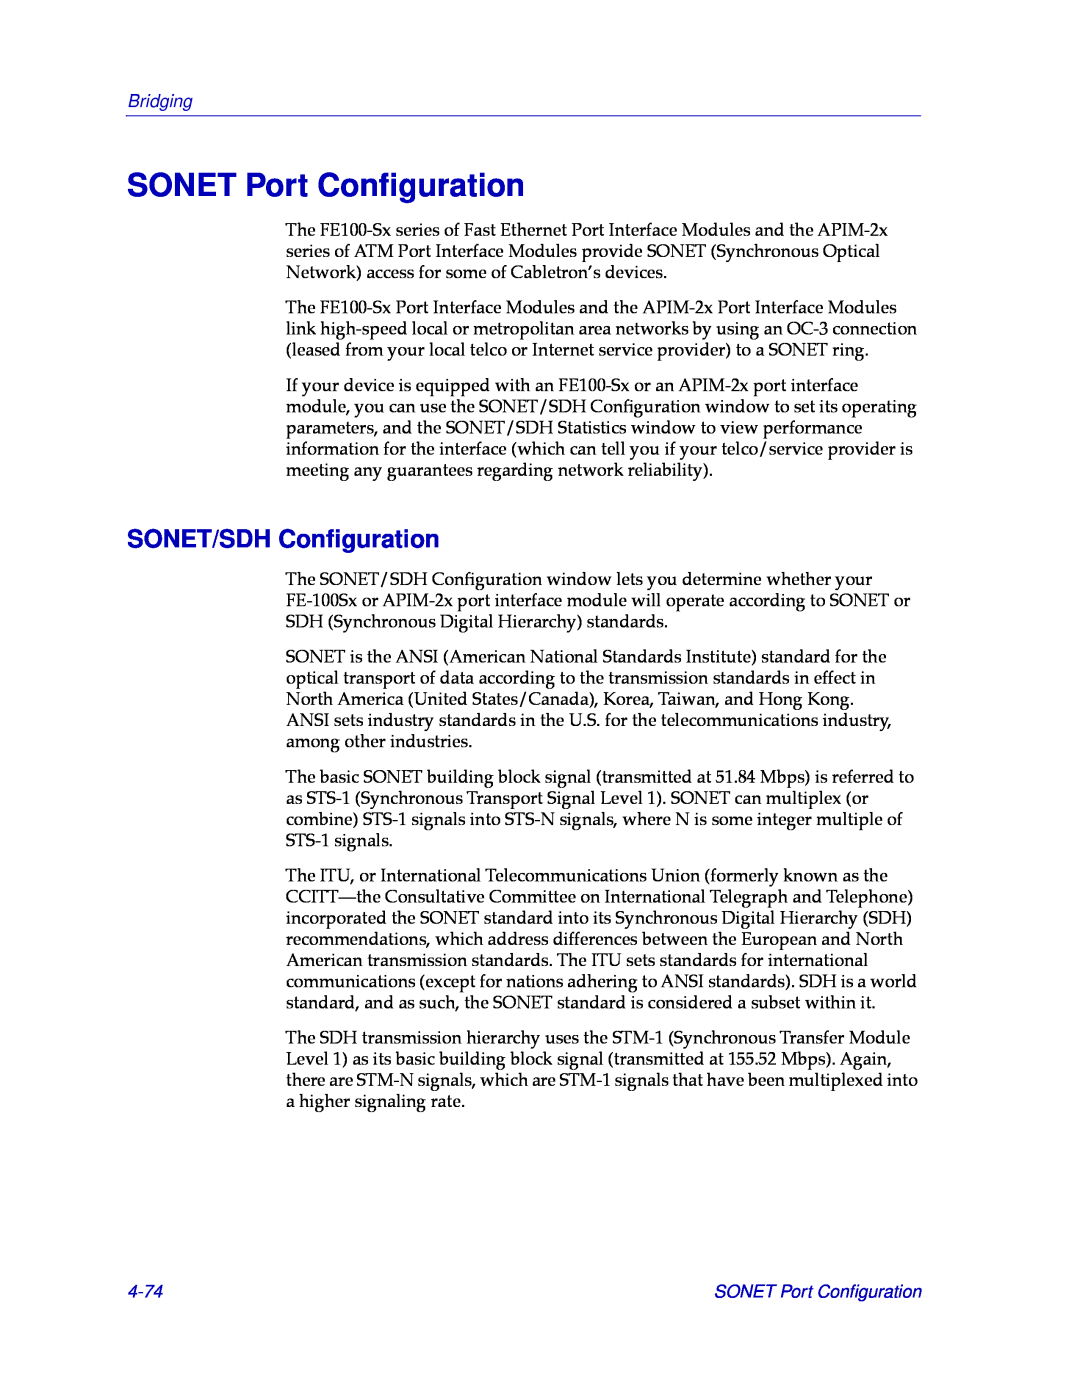 Cabletron Systems CSX400, CSX200 manual SONET Port Conﬁguration, SONET/SDH Conﬁguration, 4-74, Bridging 